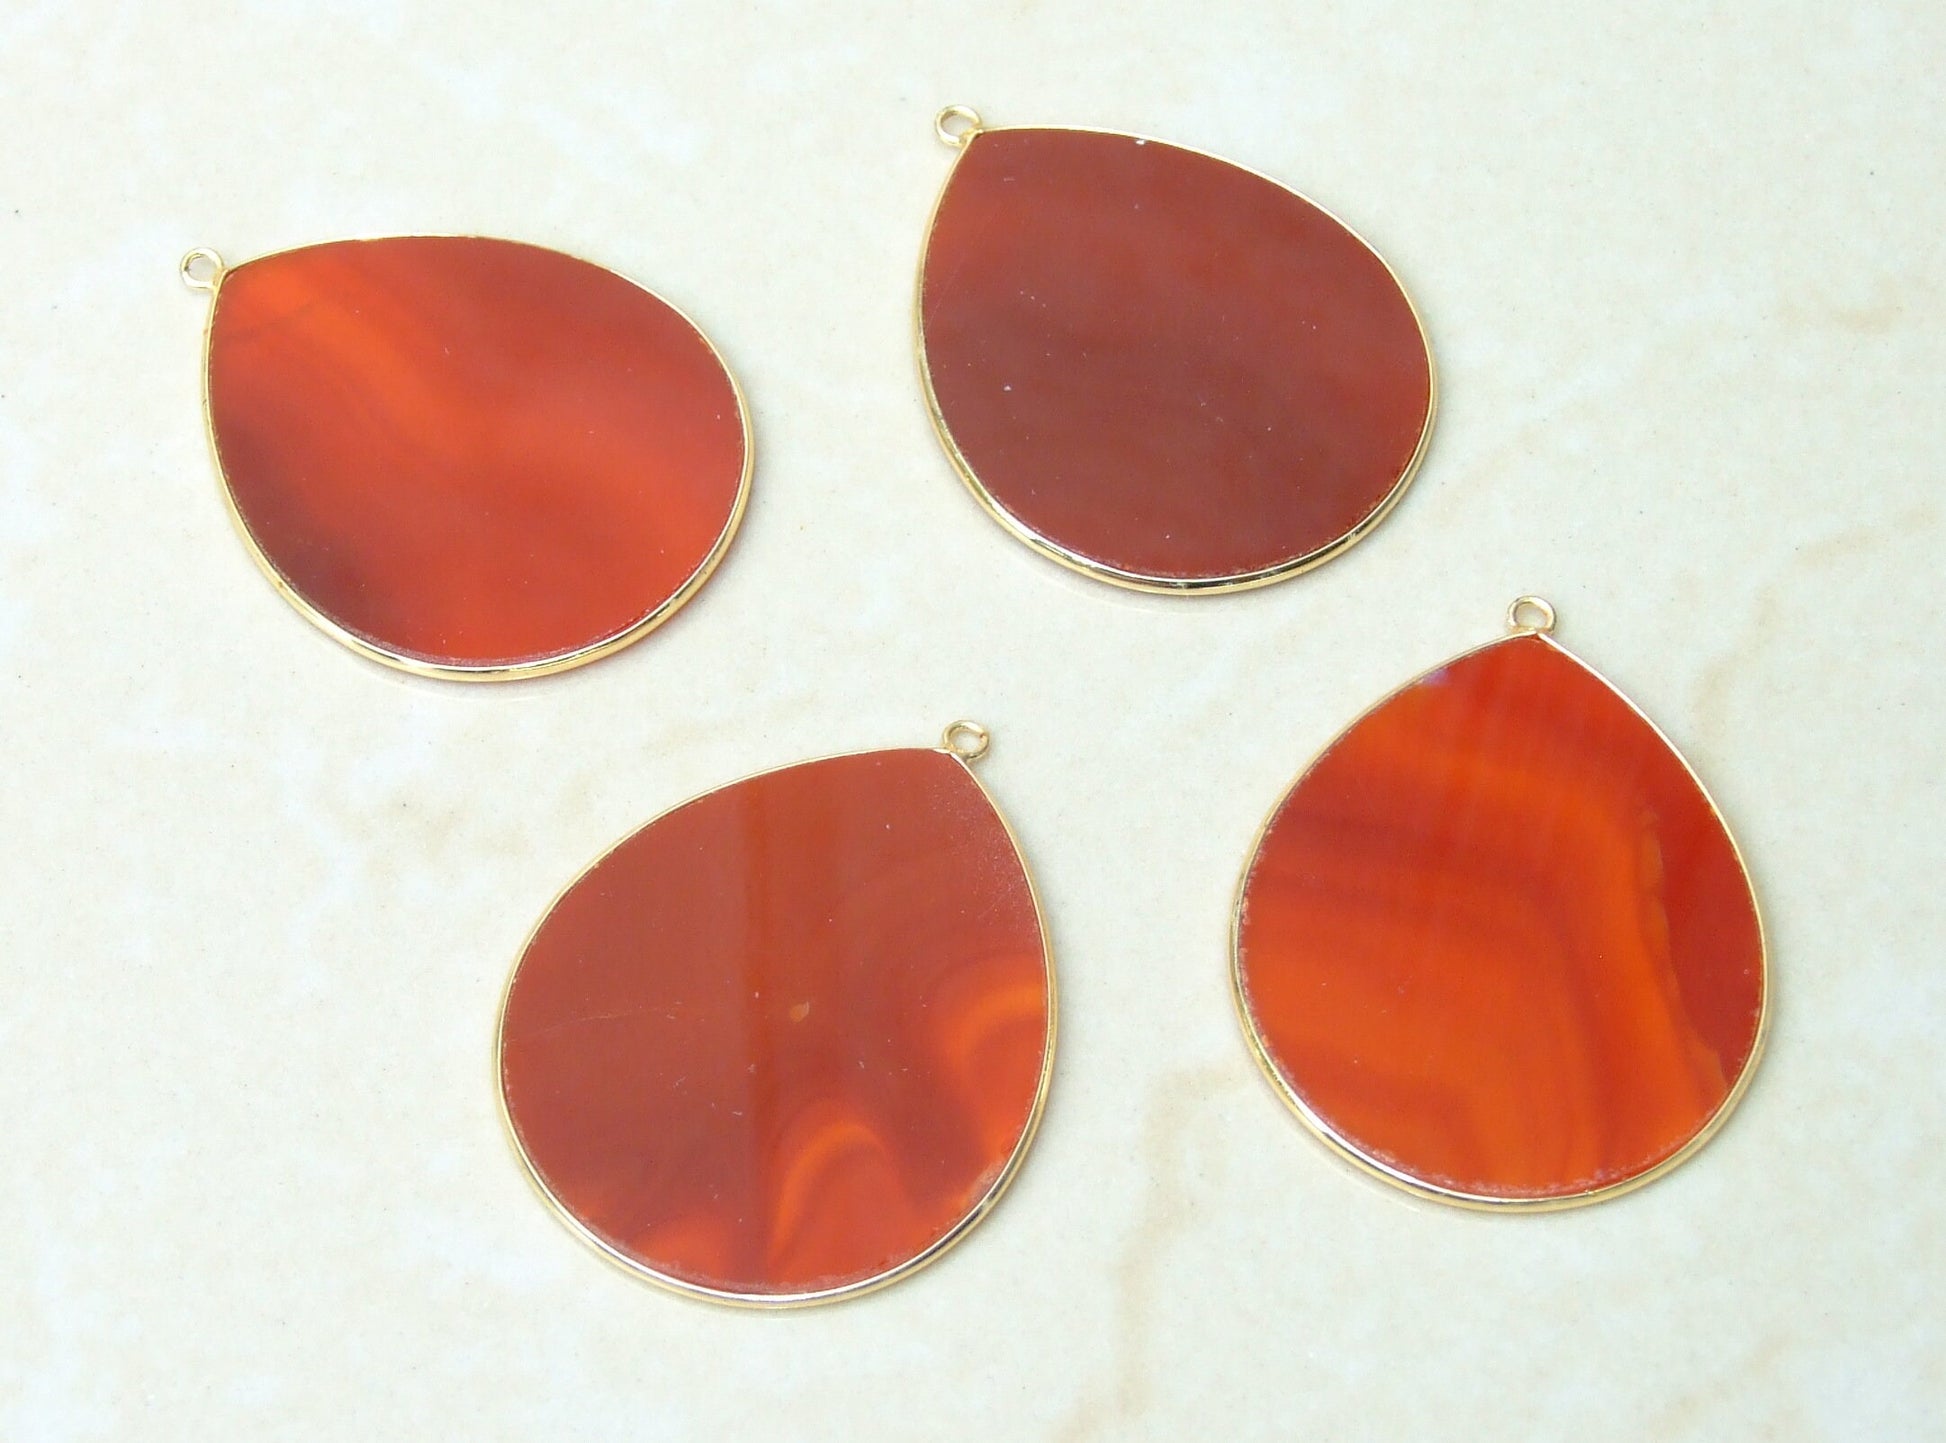 Carnelian Pendant, Gemstone Pendant, Slice Pendant, Gold Plated Bezel and Bail, Teardrop Pendant, Thin and Polished - 32mm x 38mm